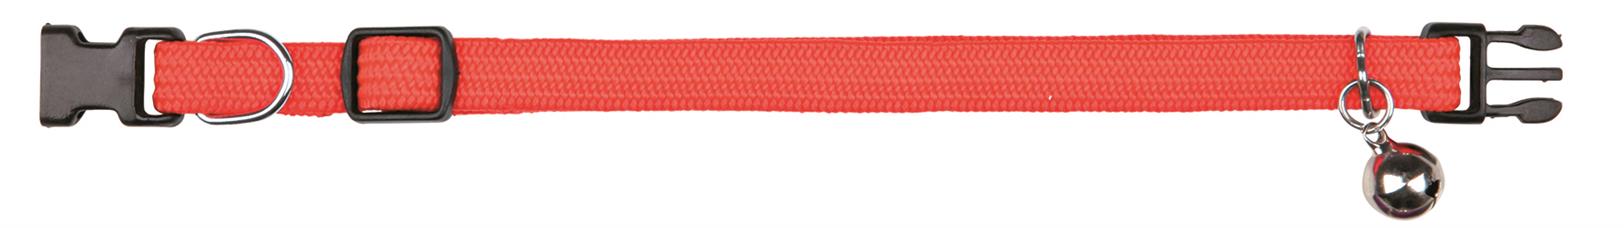 Trixie Nylon Katzenhalsband, elastisch, diverse Farben